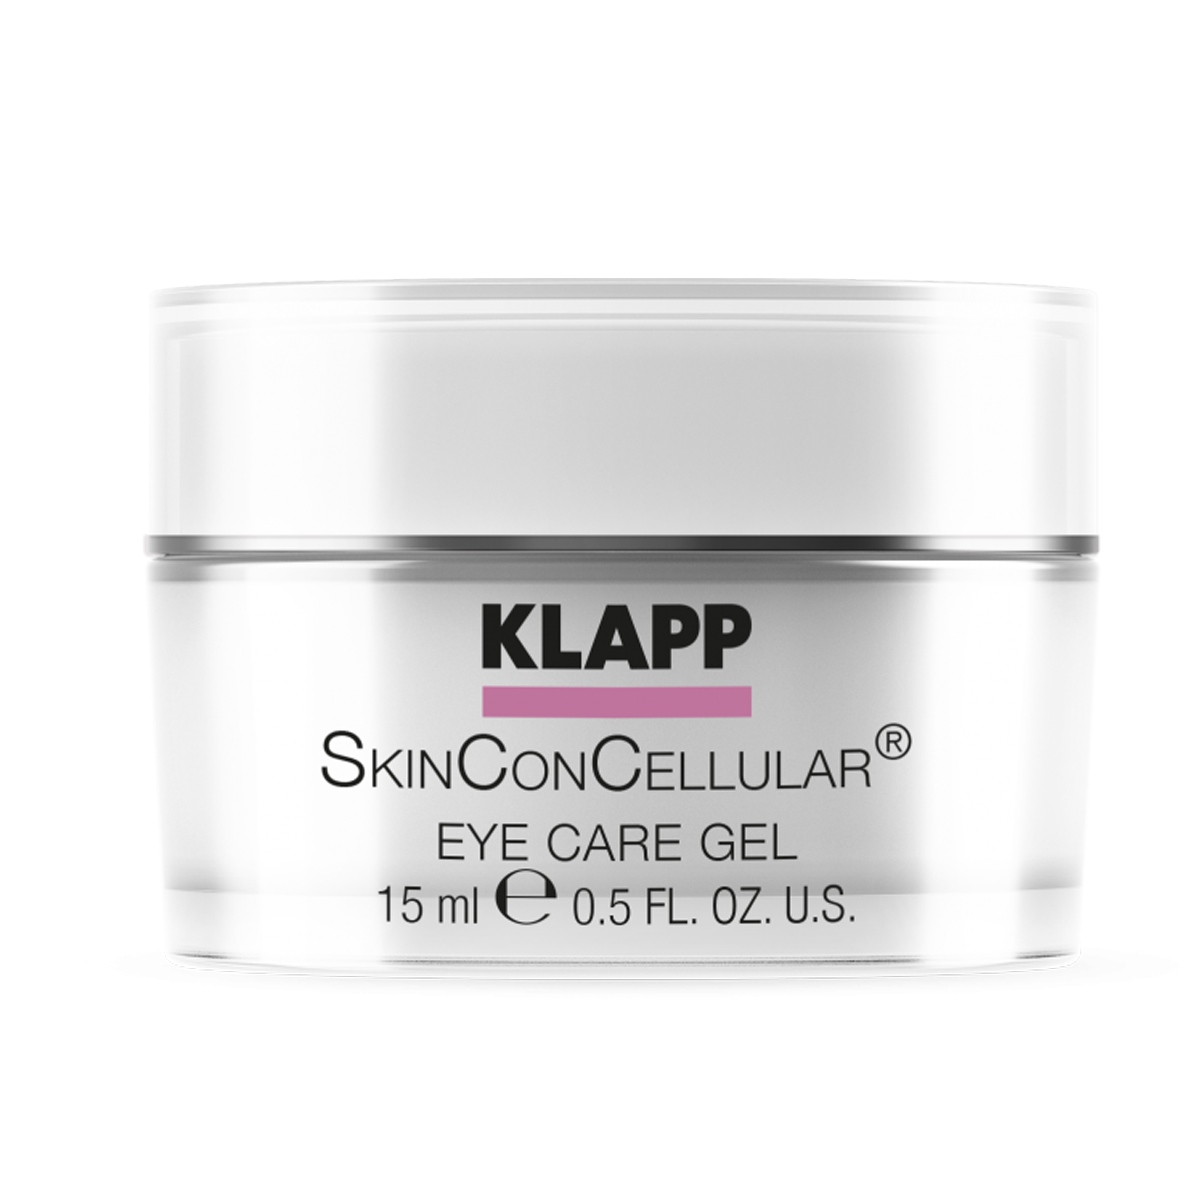 KLAPP Skinconcellular Eye Care Gel 15 ml